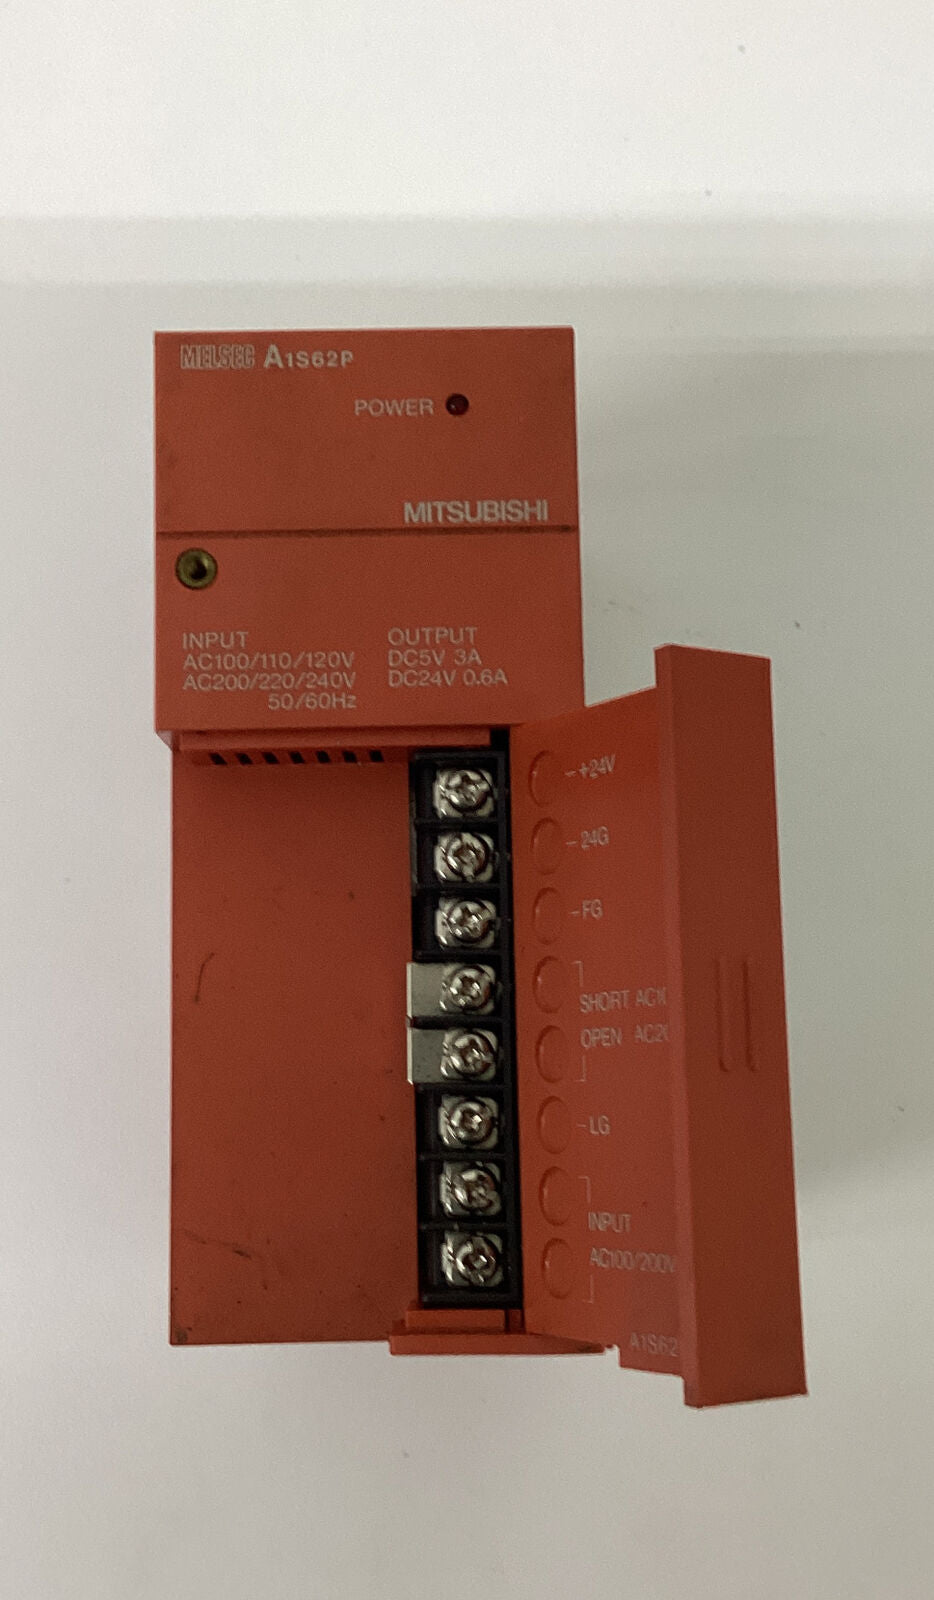 Mitsubishi A1S62P  Power Supply  24 VDC 3 Amps  (OV126) - 0